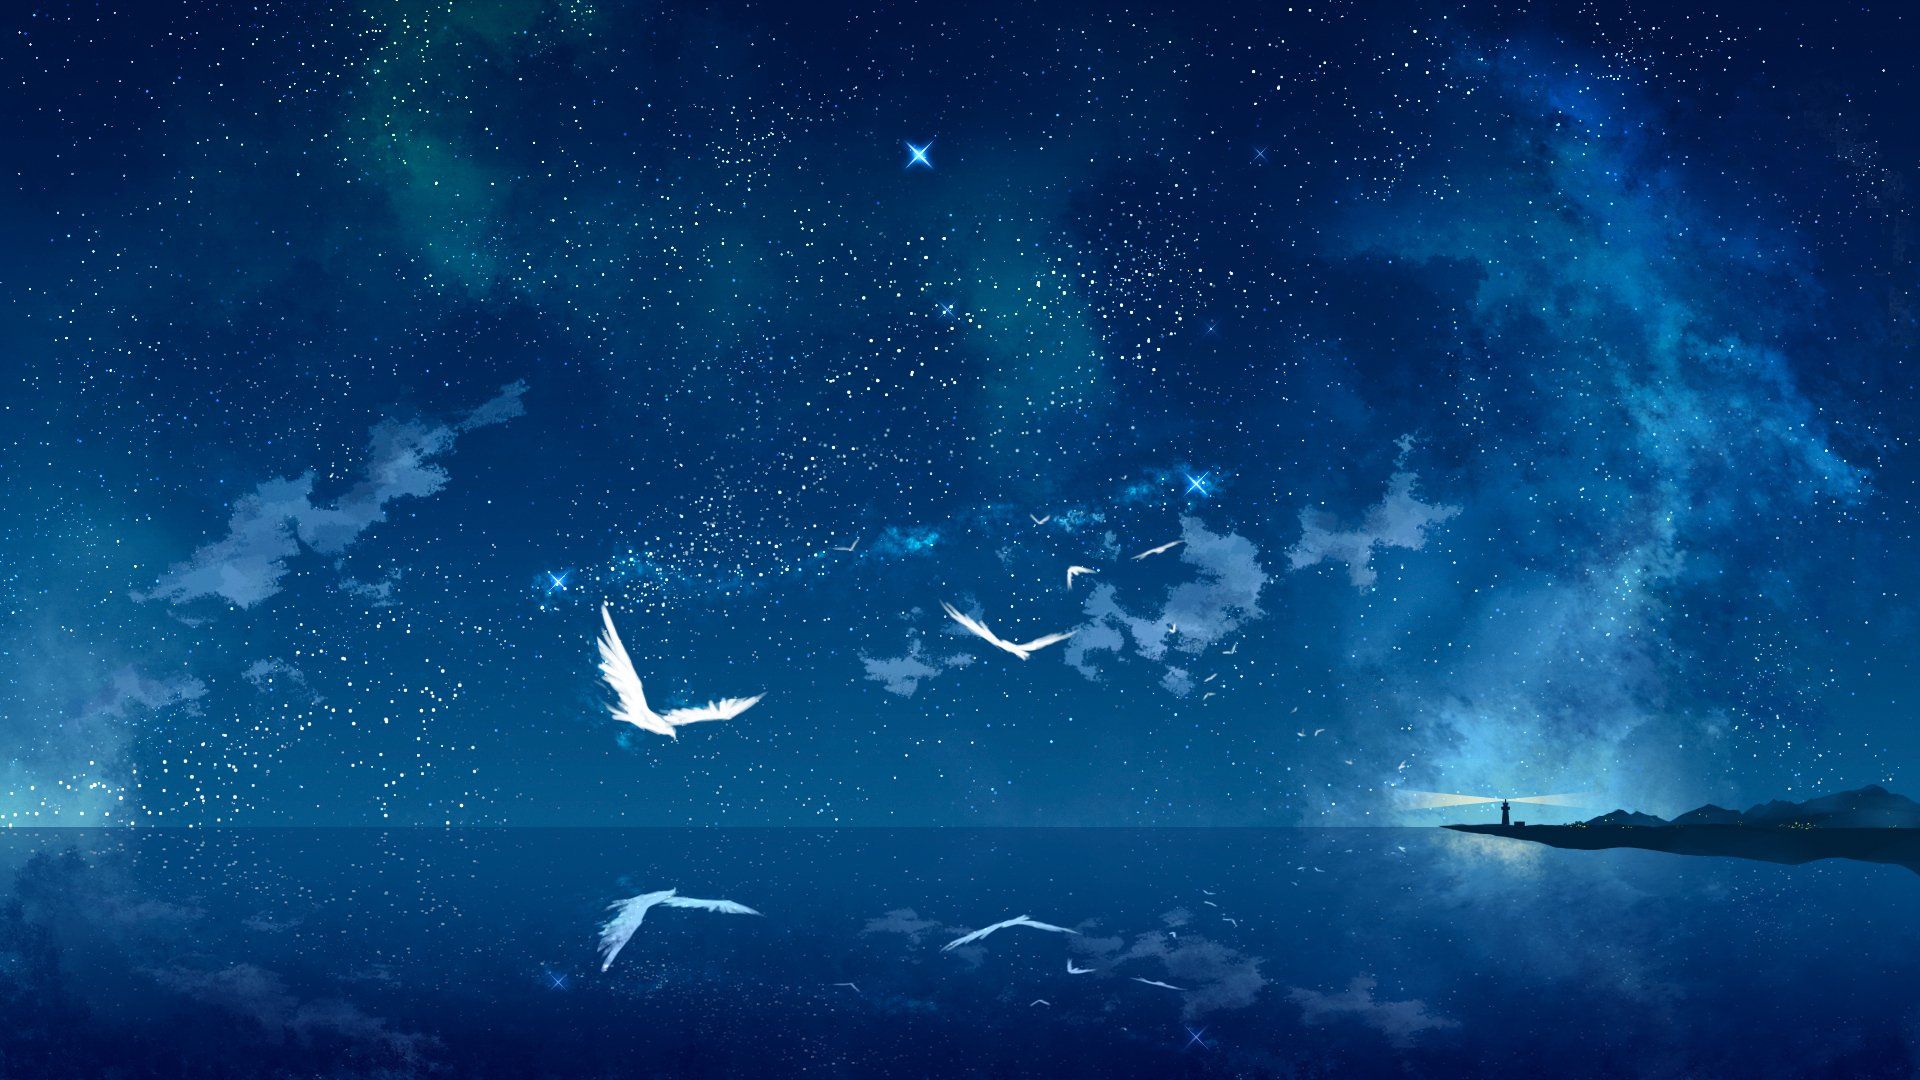 Birds flying in the night sky wallpaper 1920x1080 - Anime landscape